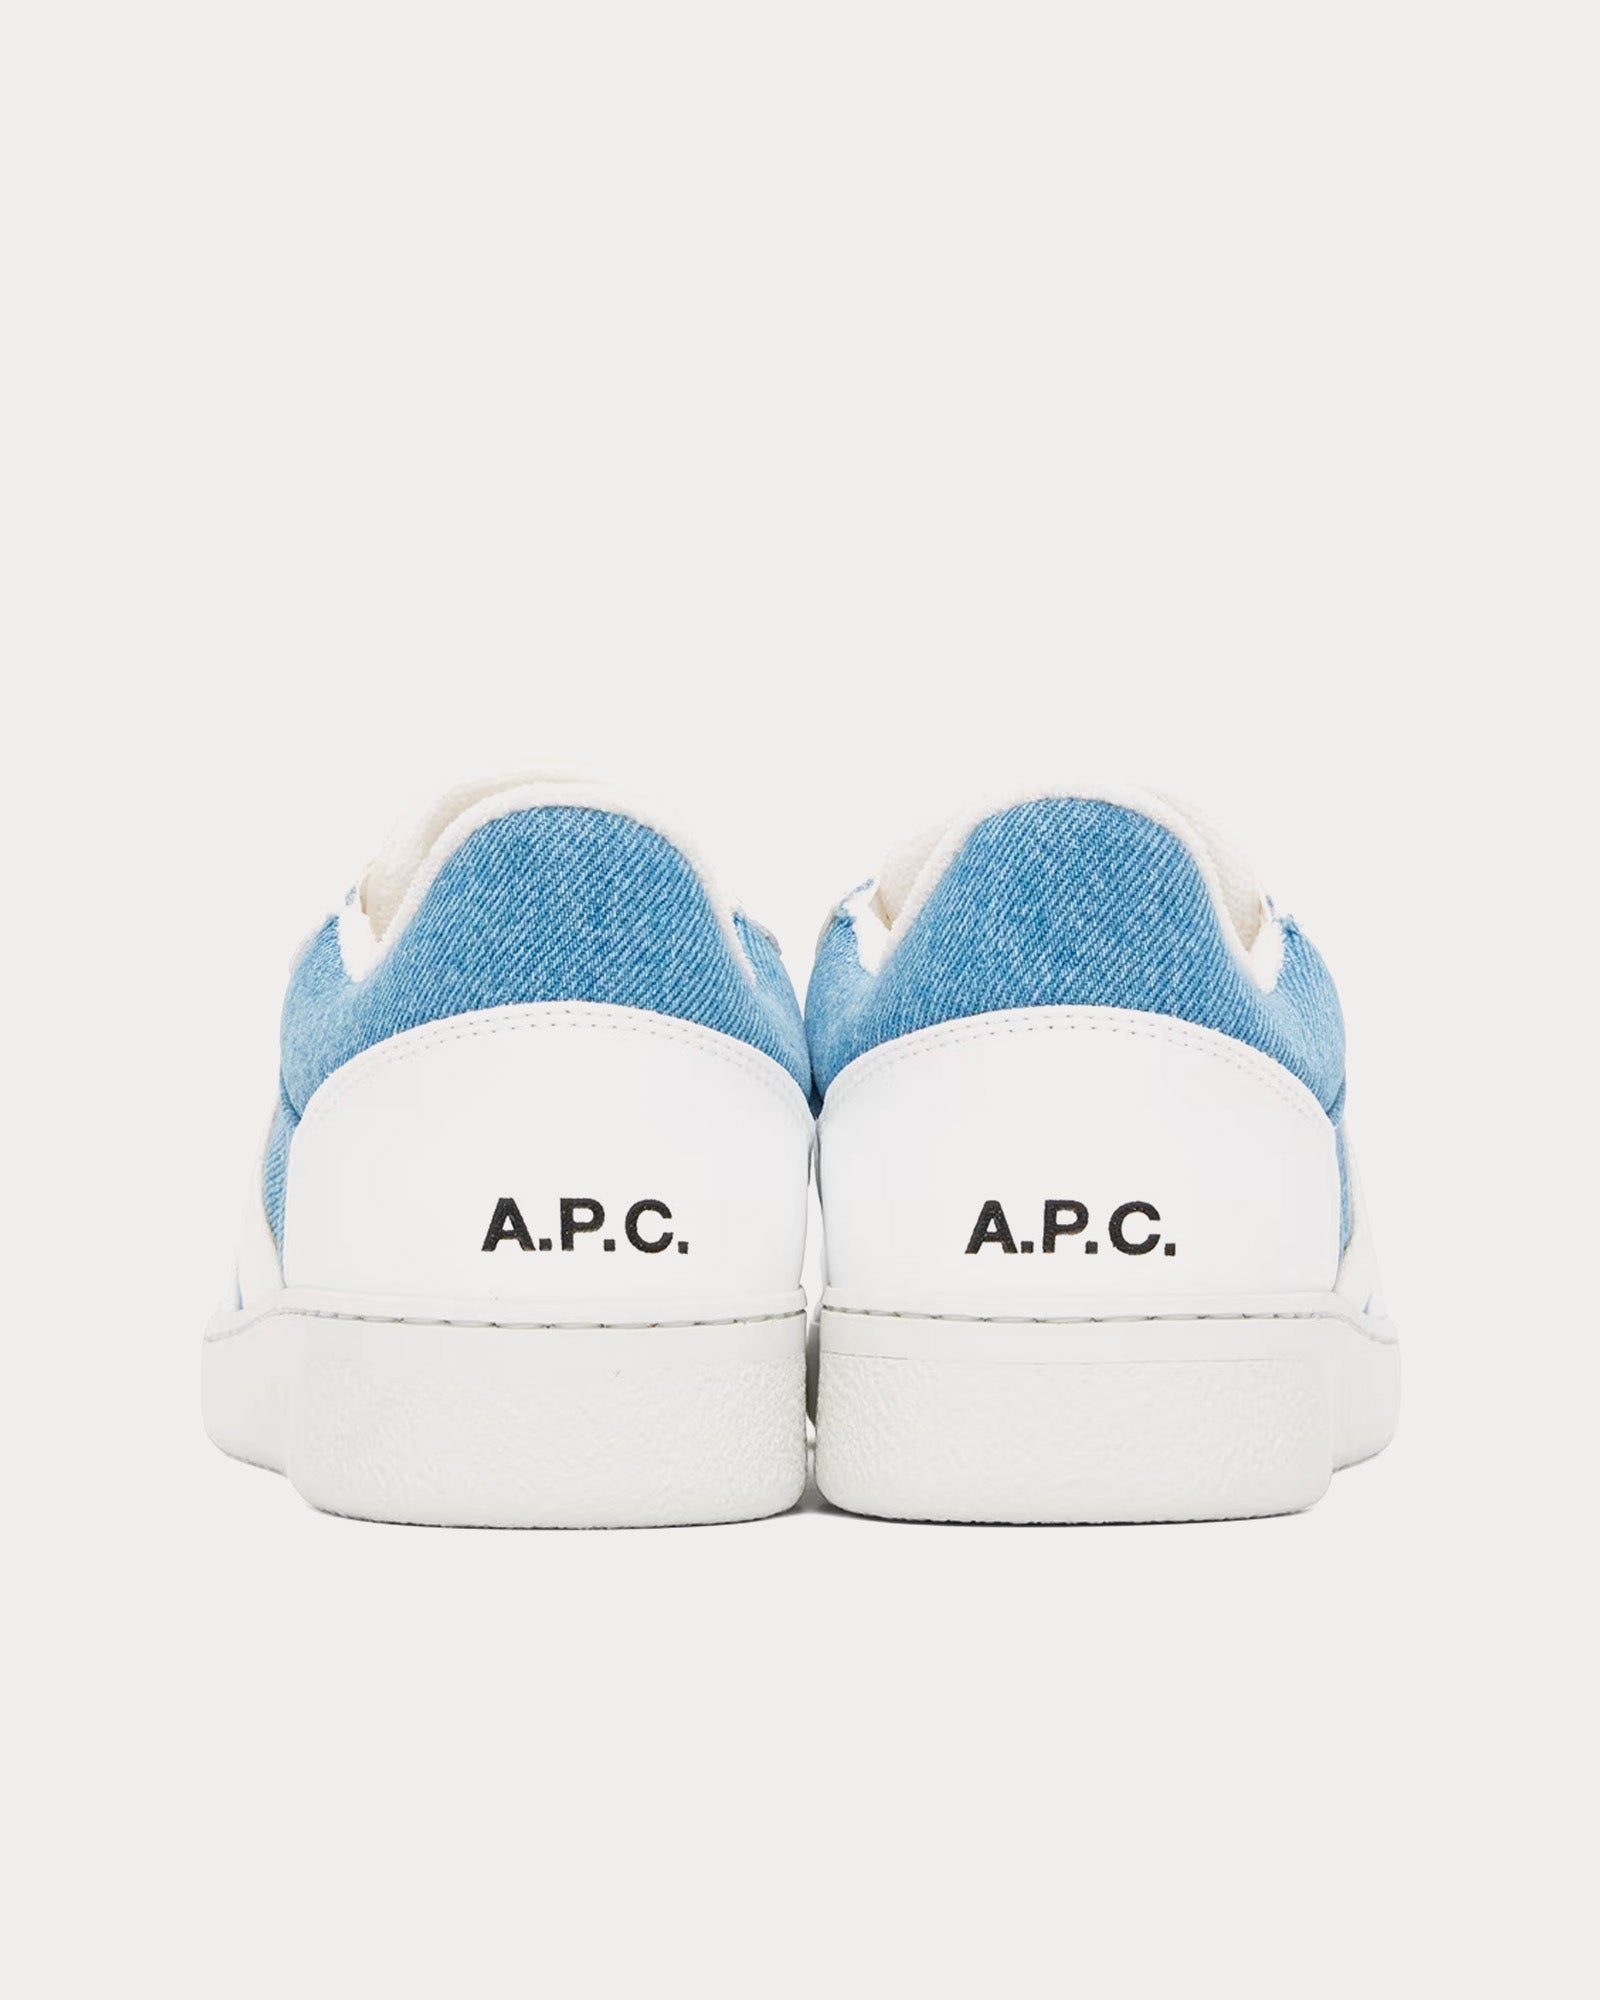 A.P.C. - Plain White / Light Blue Low Top Sneakers